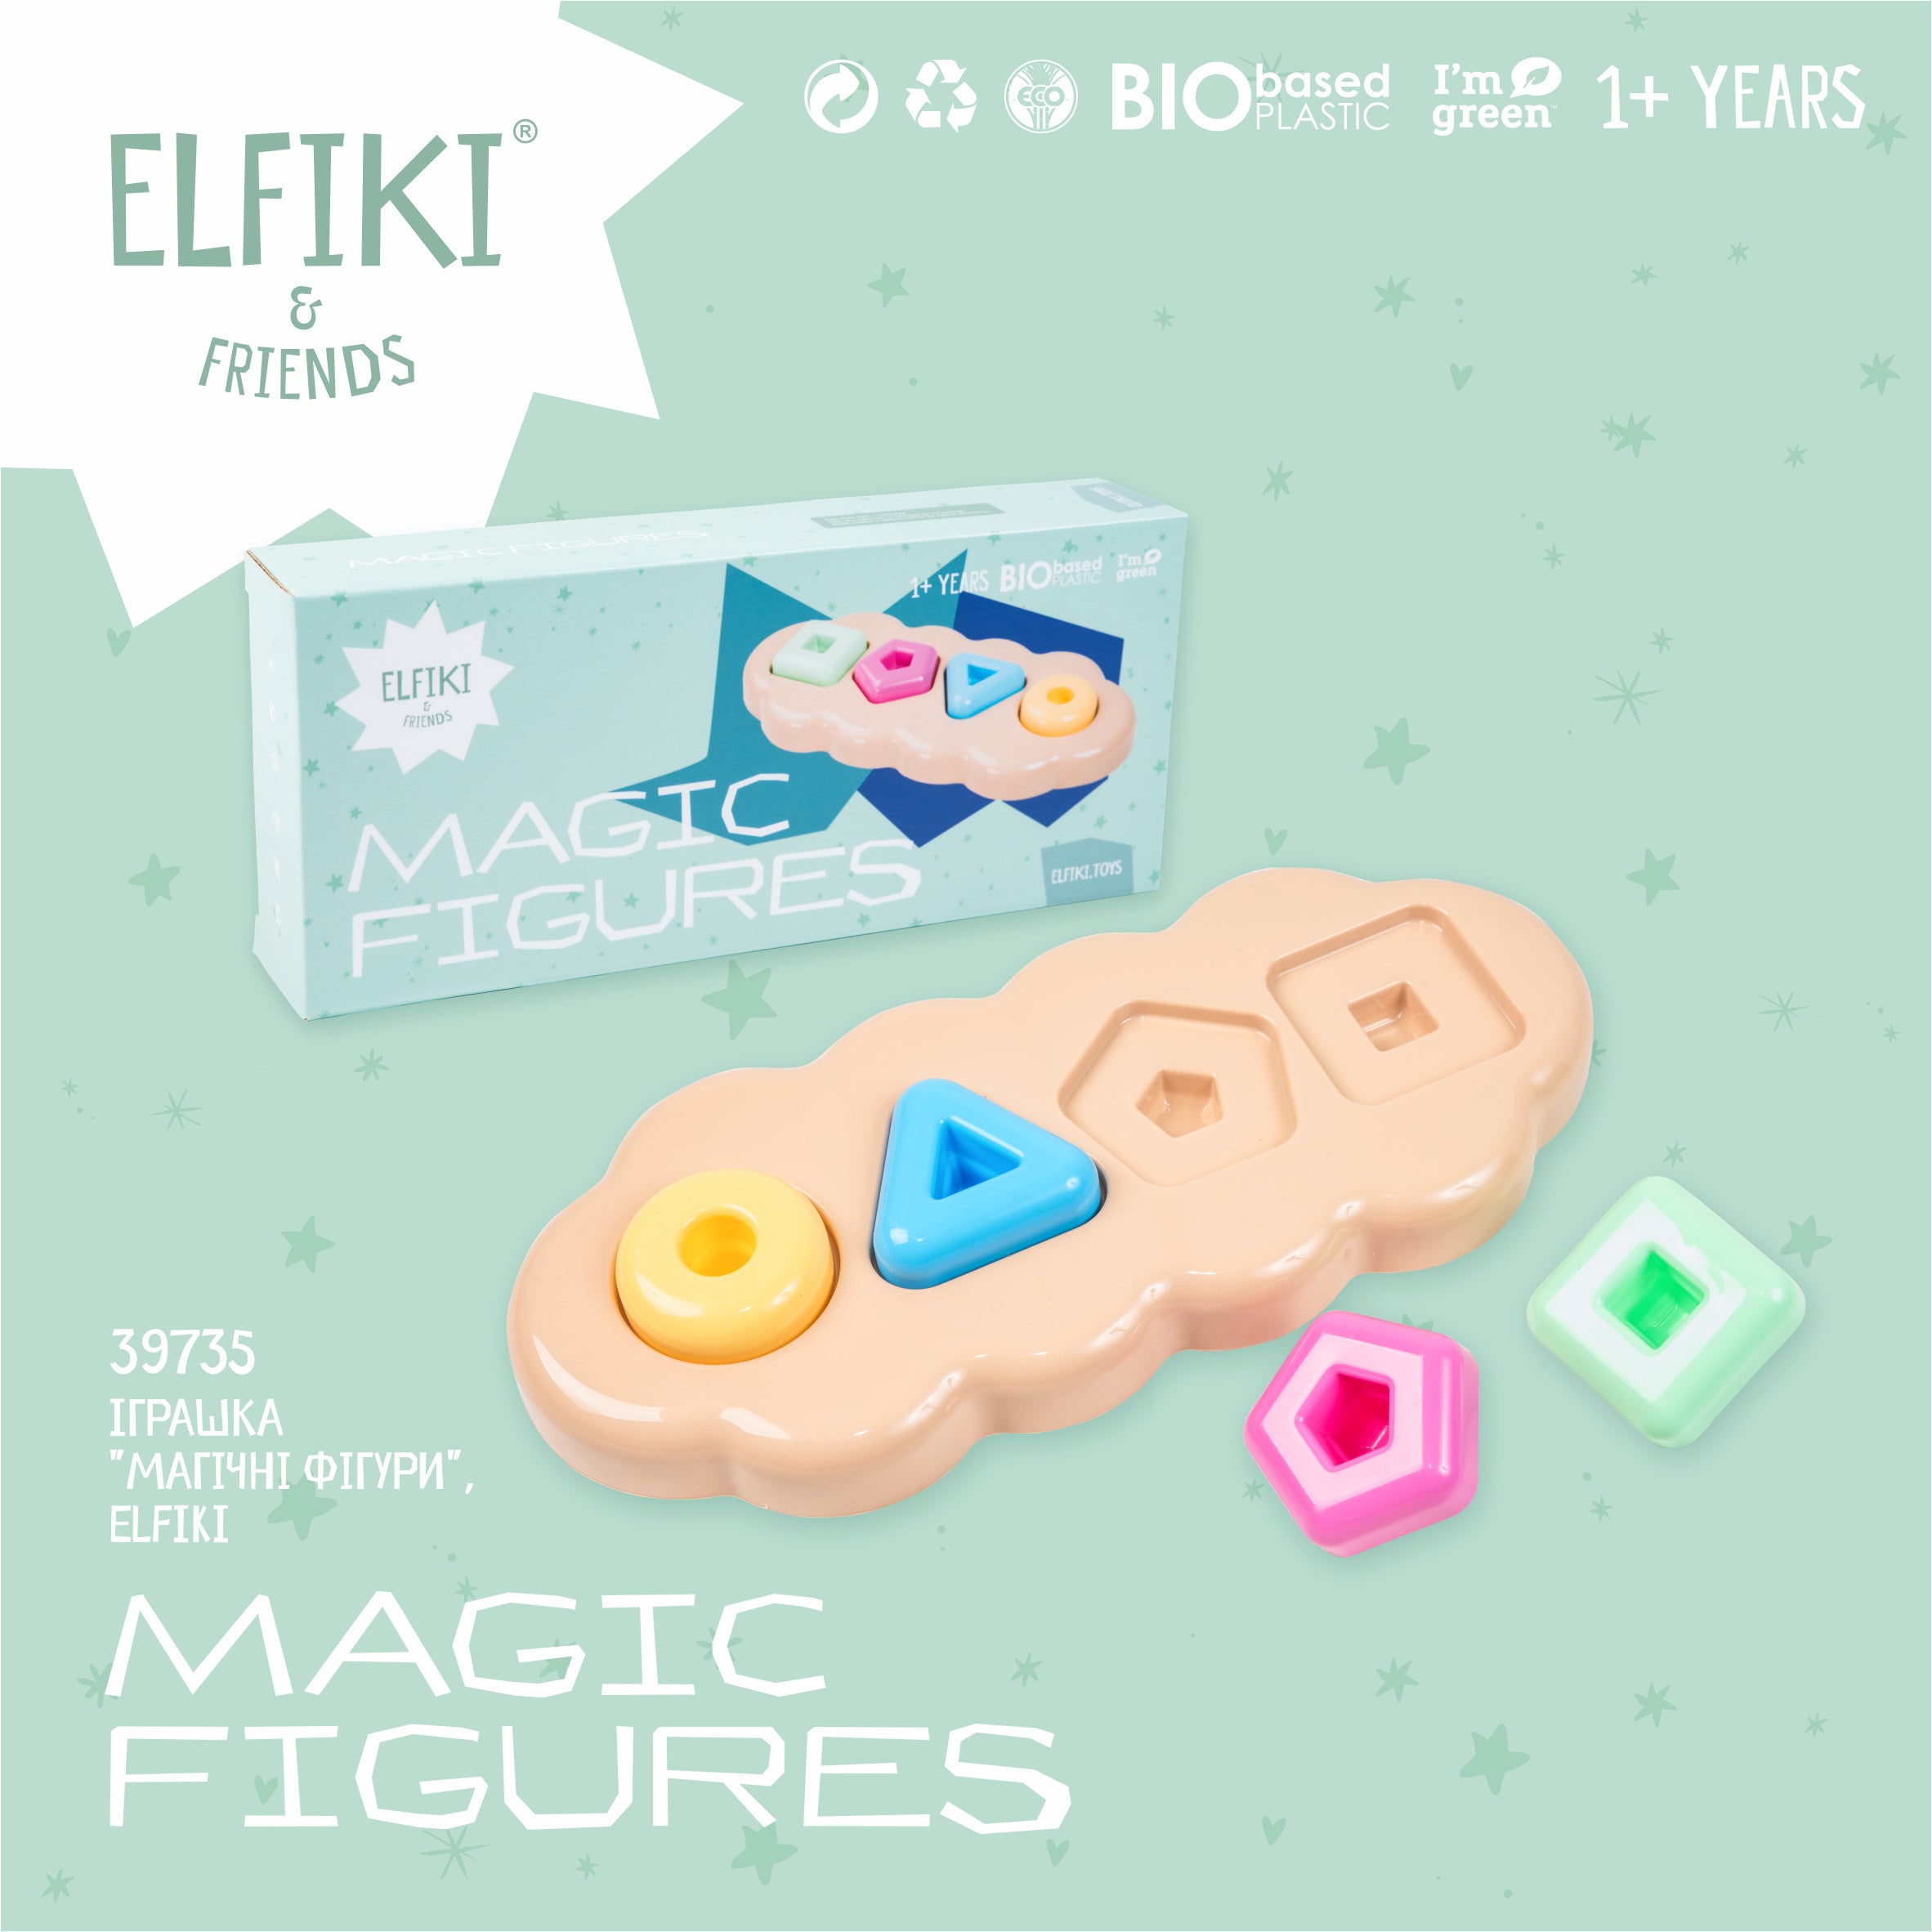 Bioplastic toys - magic figures educational toy.